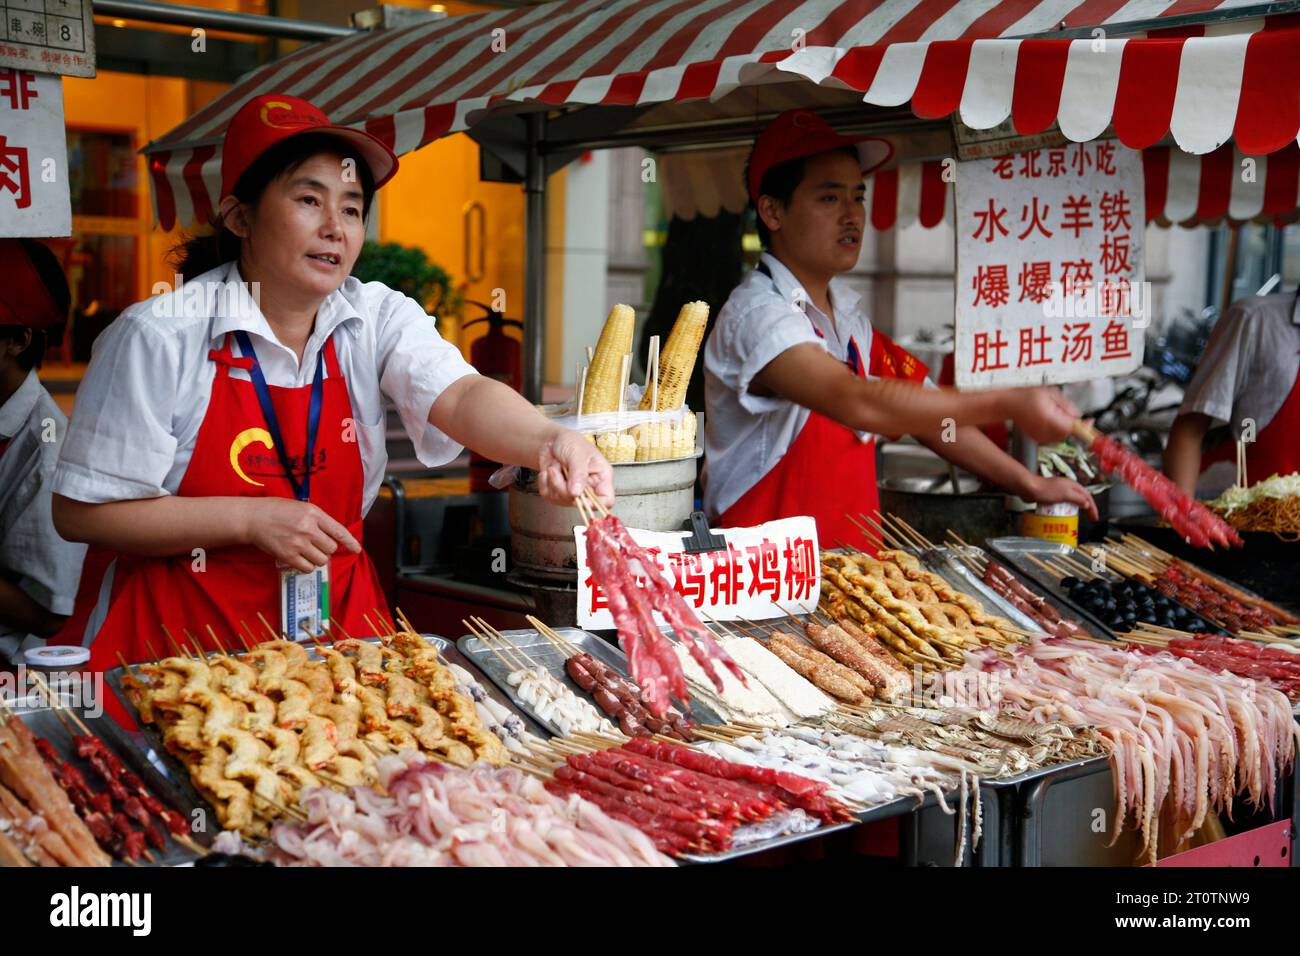 Food stalls at Donganmen food market, near Wangfuging Dajie, Beijing, China. Stock Photo